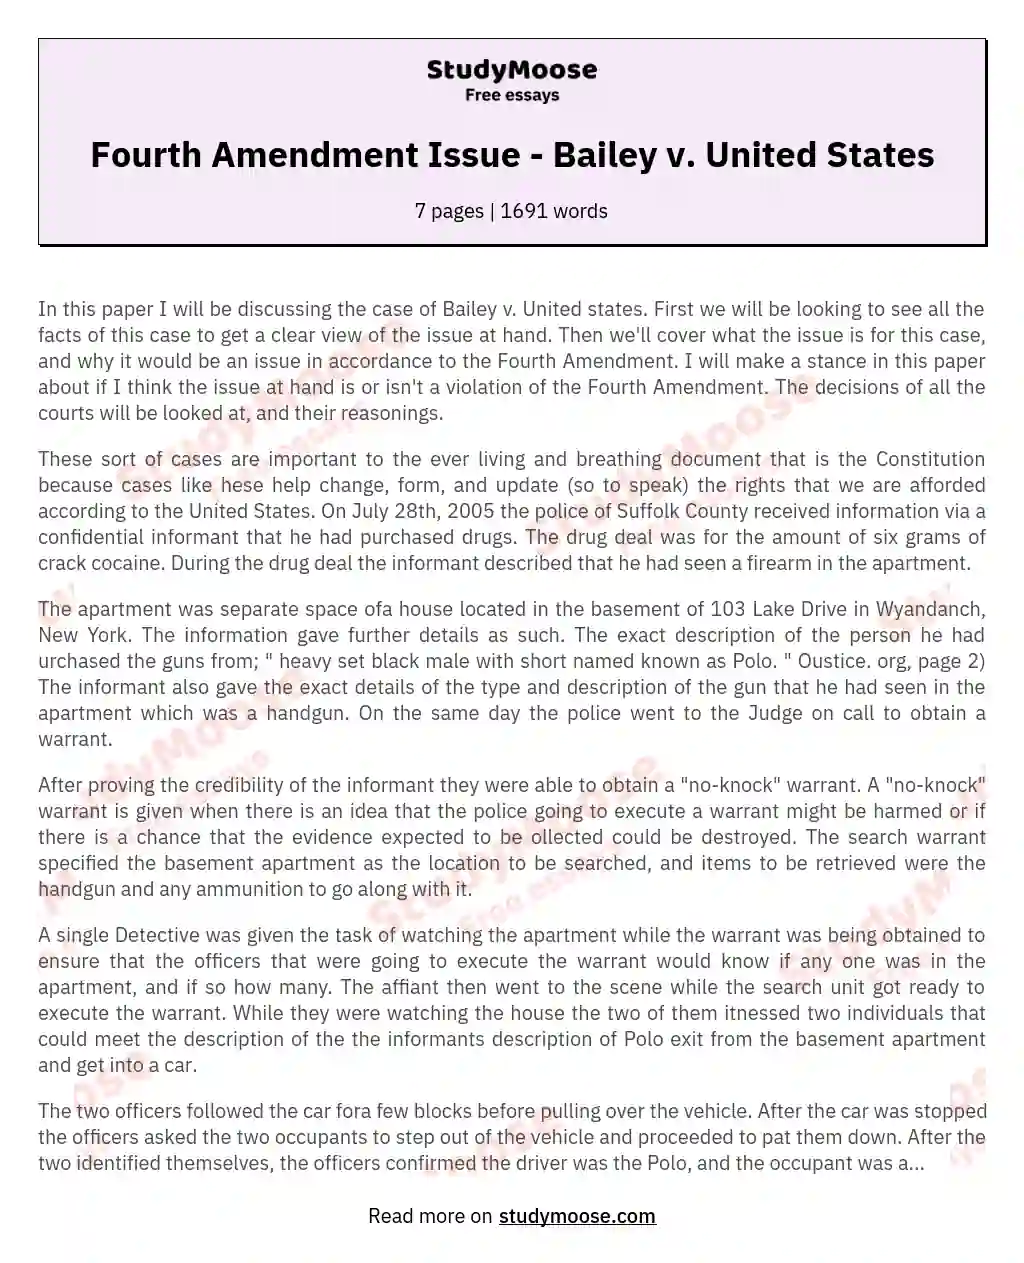 Fourth Amendment Issue - Bailey v. United States essay